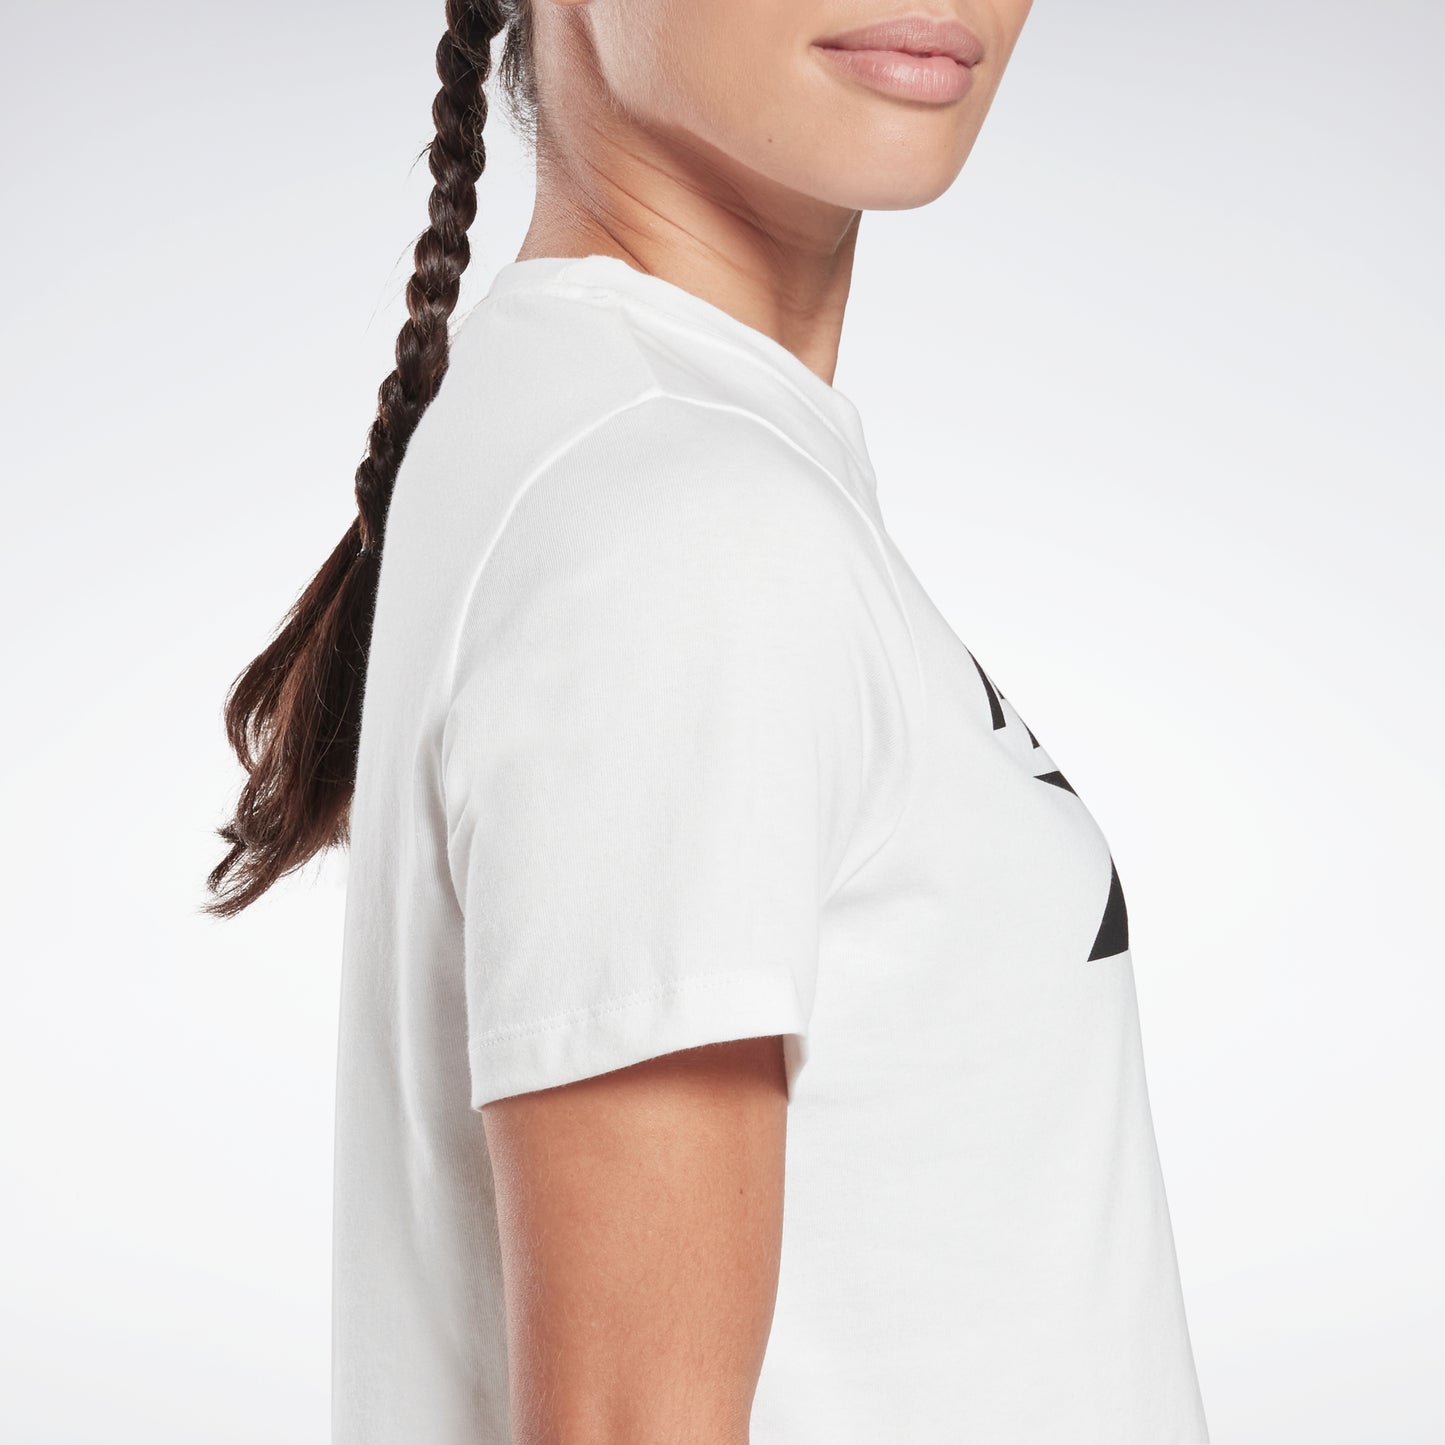 Reebok Apparel Women Reebok Identity T-Shirt White